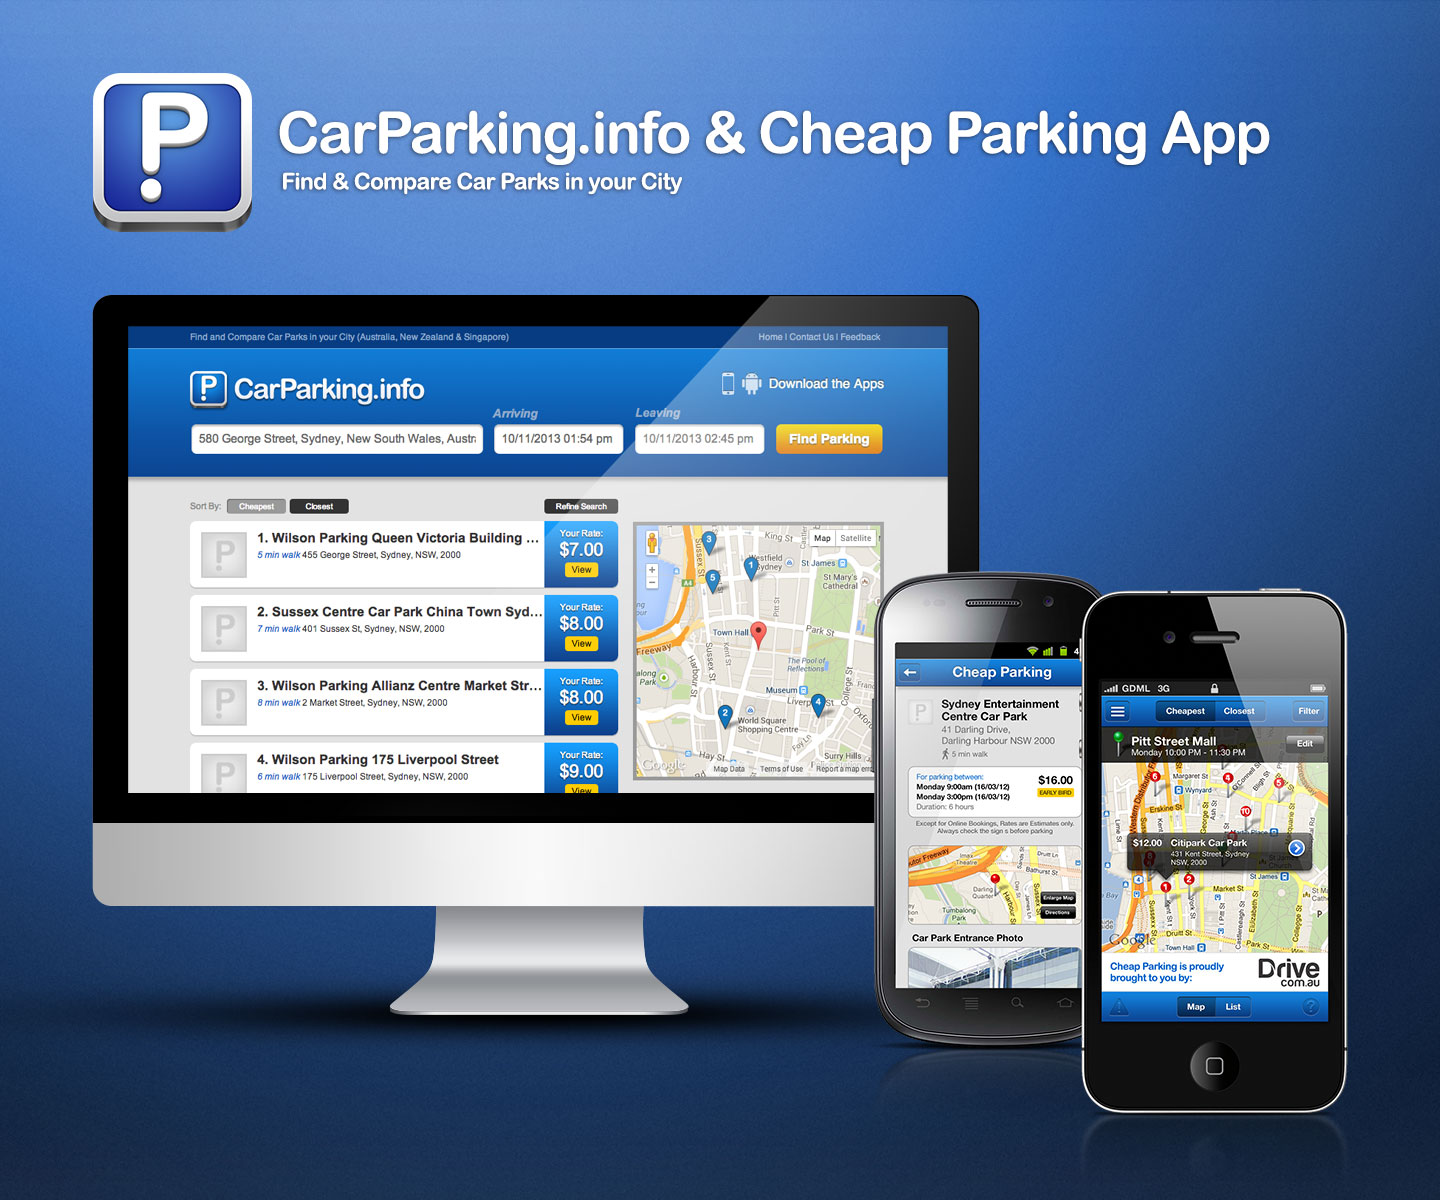 CarParking.info & The Cheap Parking App